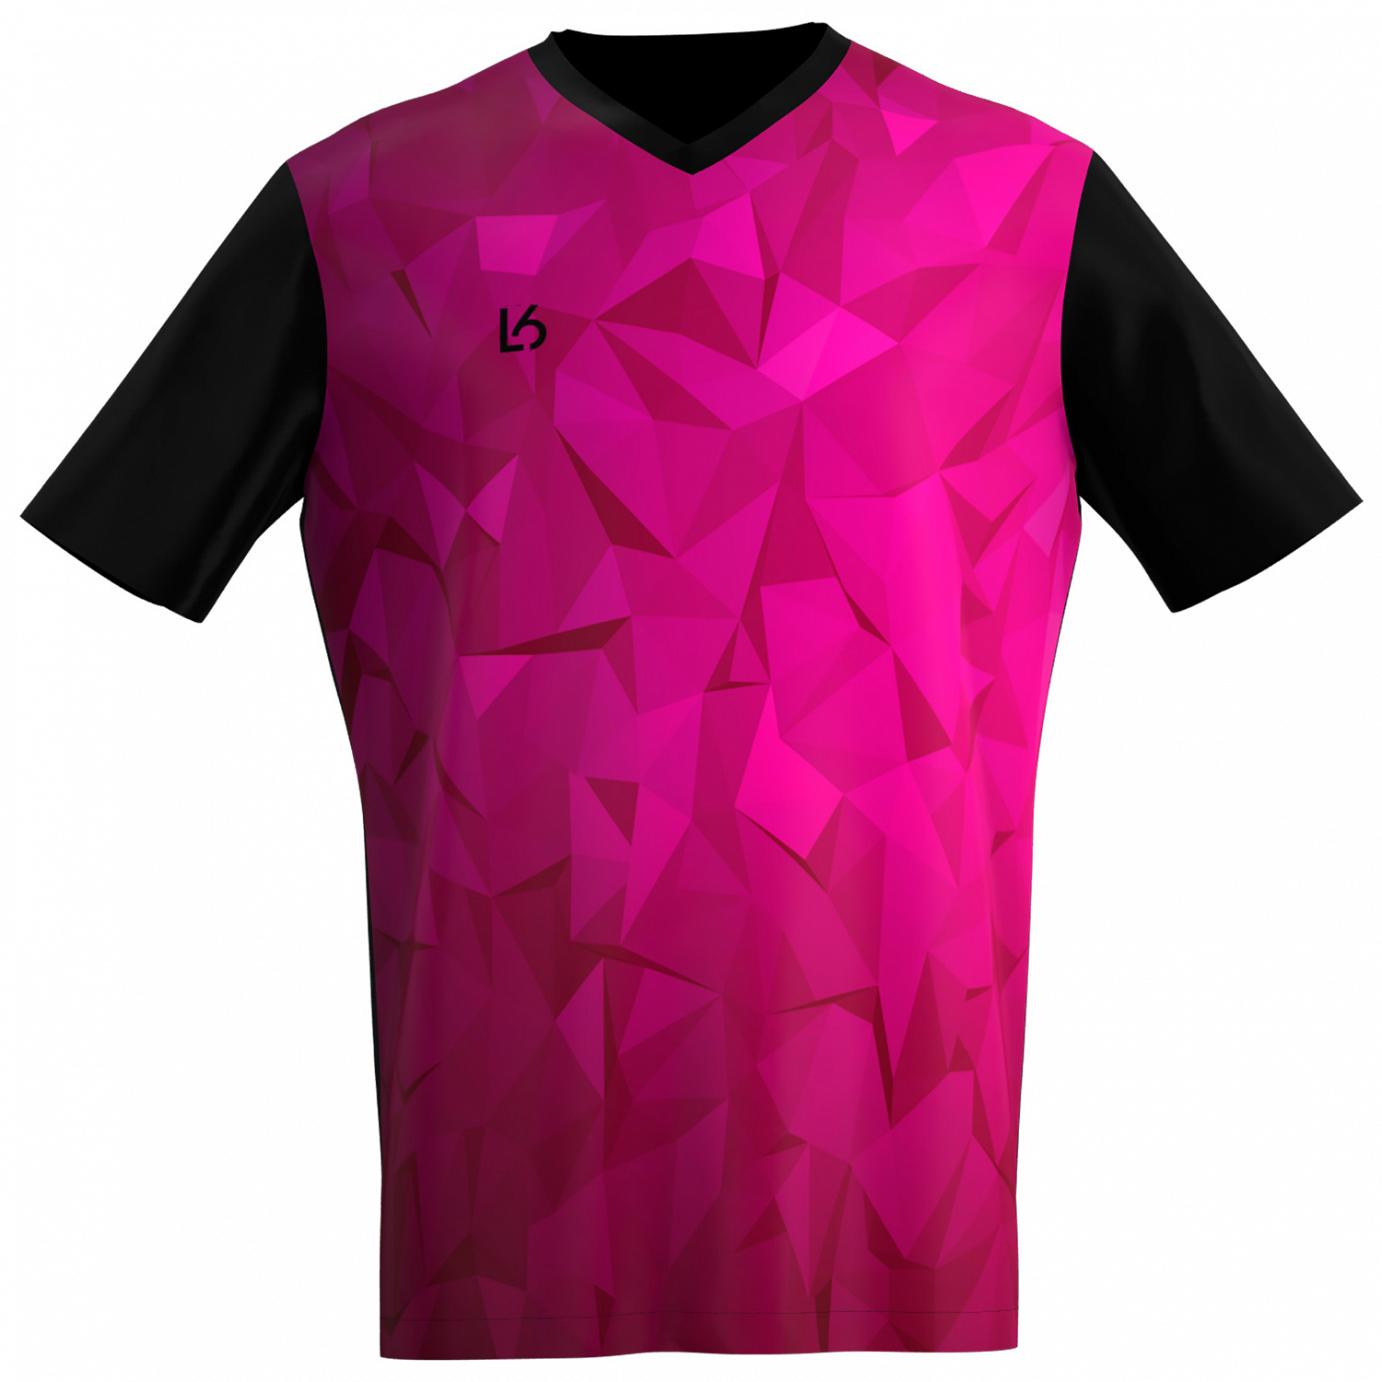 L6 V-Neck Trikot - Polygon Pink